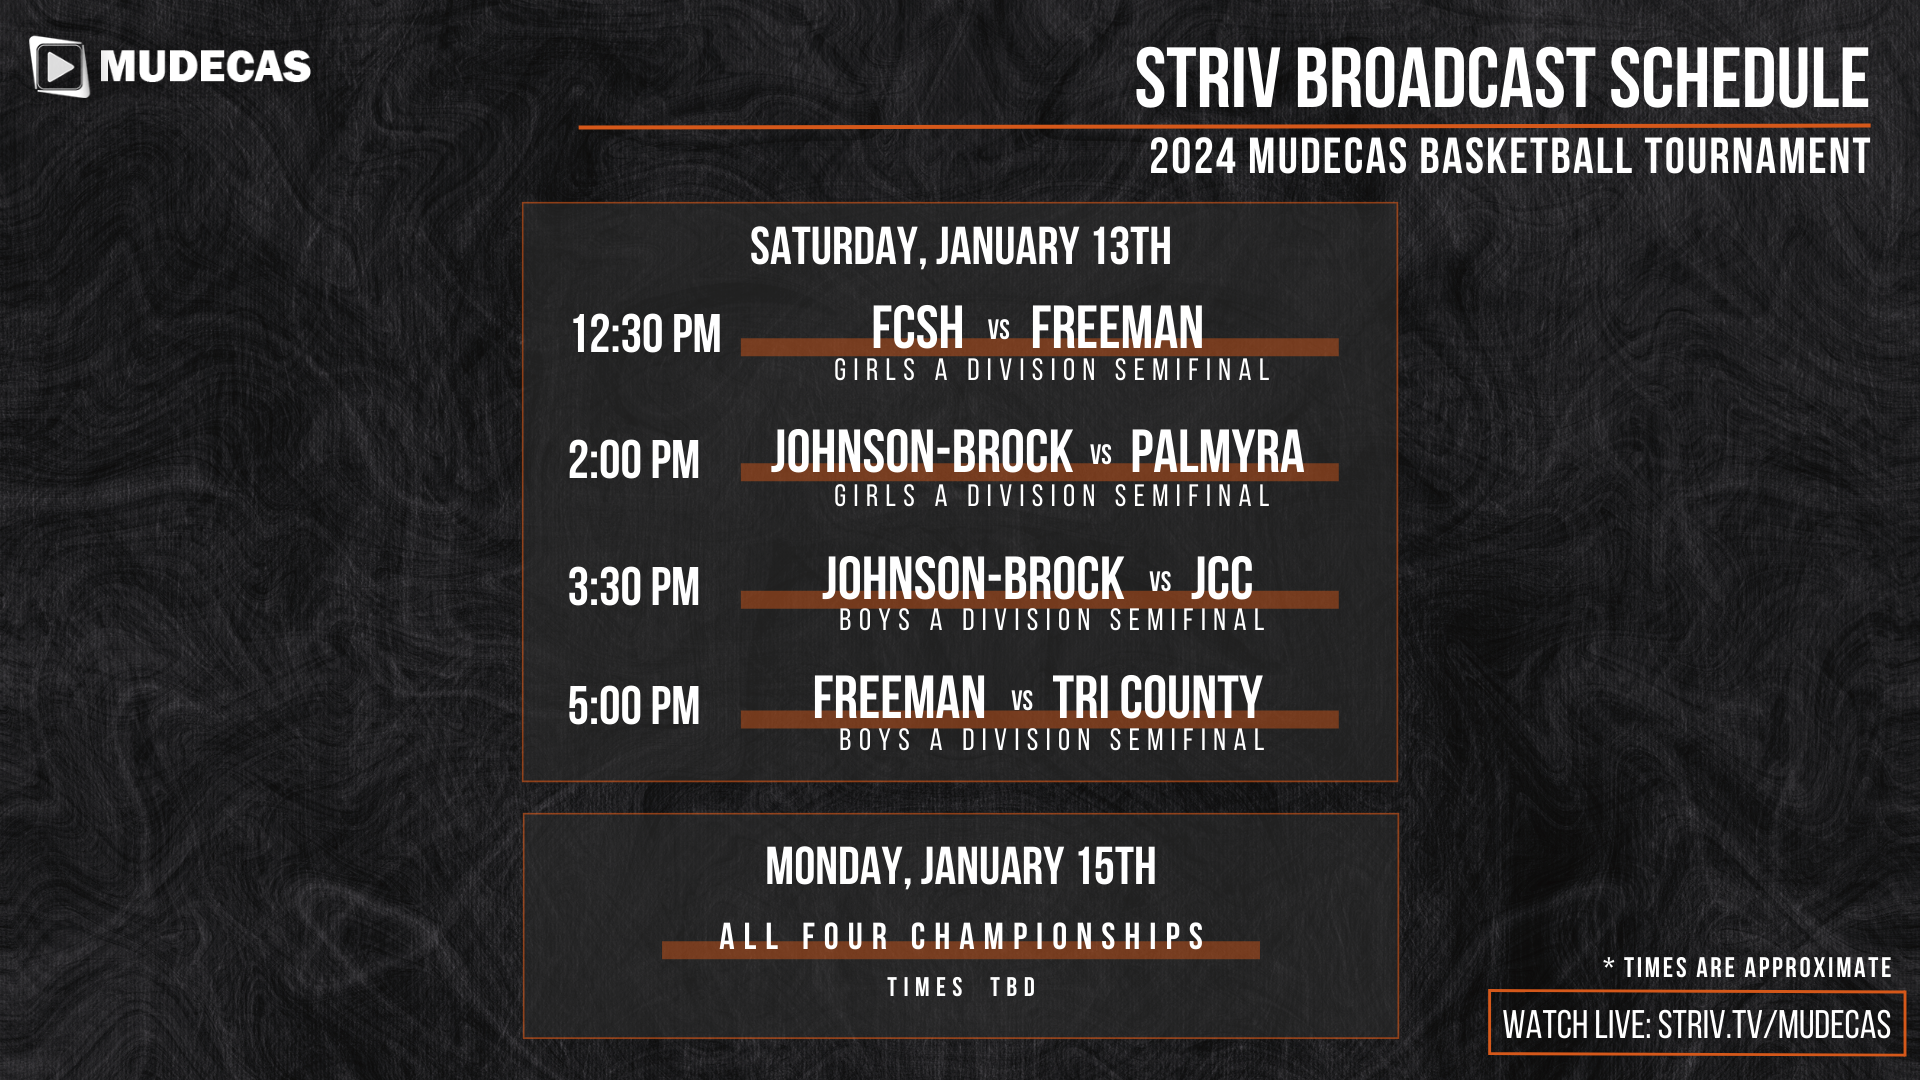 Updated broadcast schedule